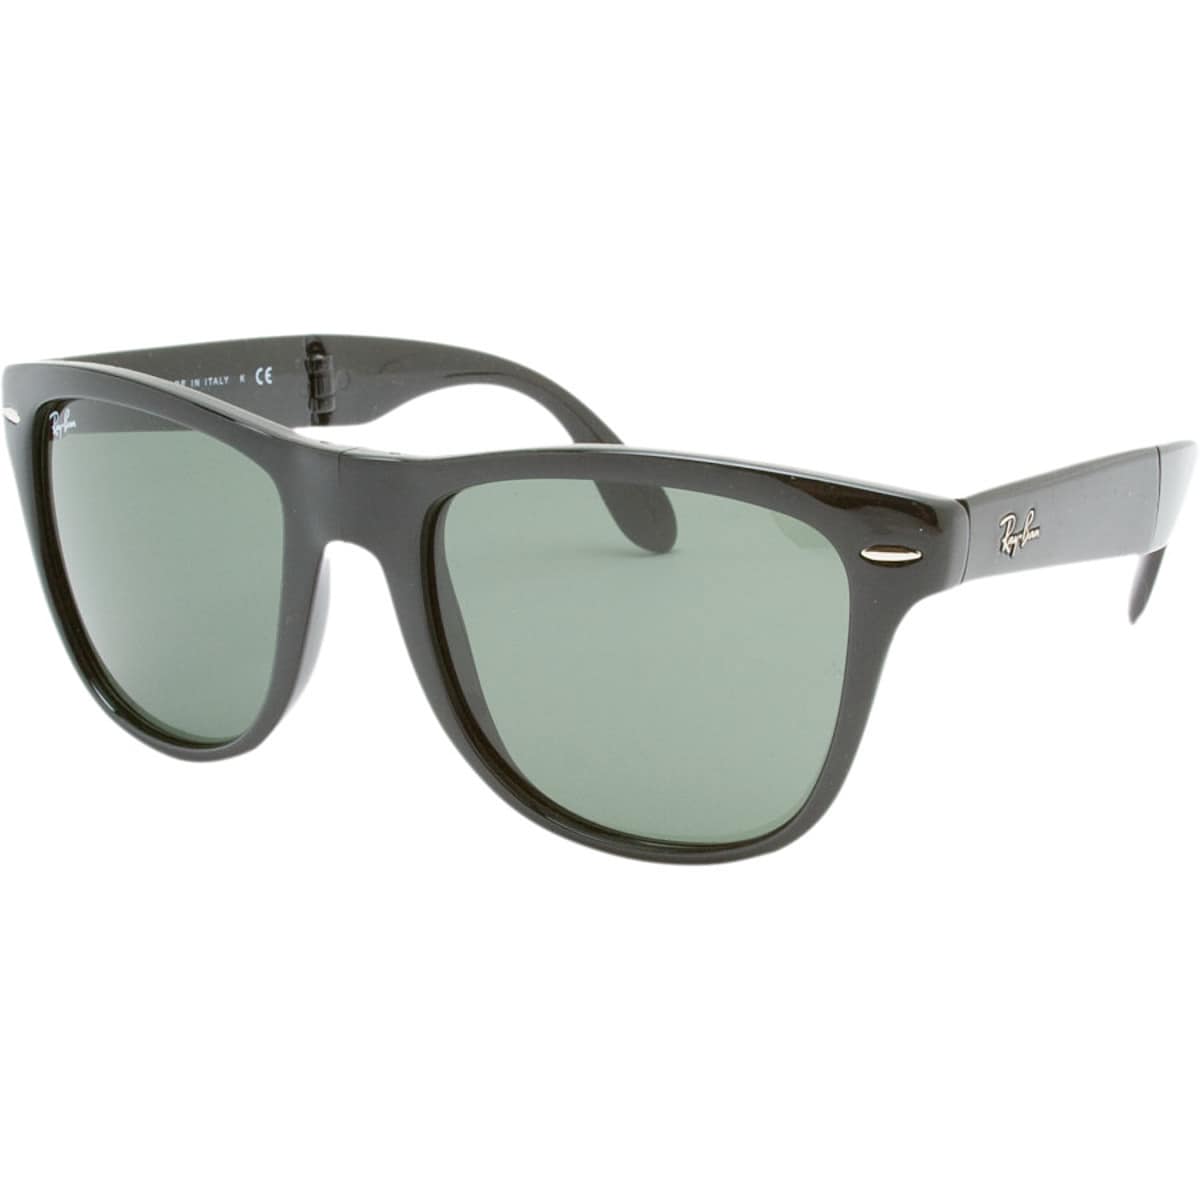 Ray-Ban Folding Wayfarer Sunglasses - Accessories